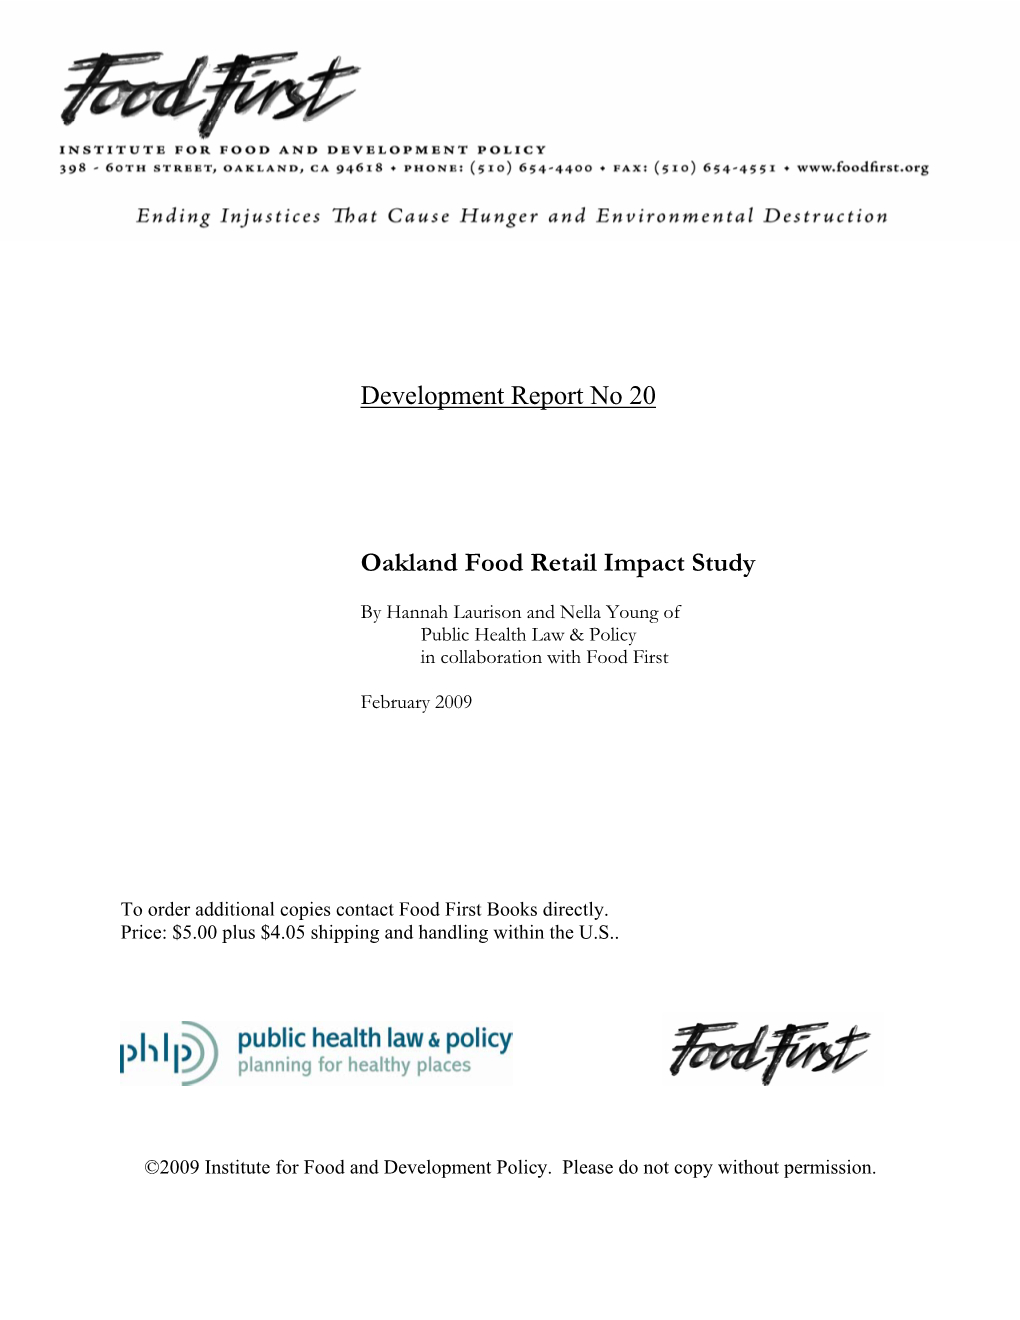 Development Report No 20 OAKLAND FOOD RETAIL IMPACT STUDY Ii